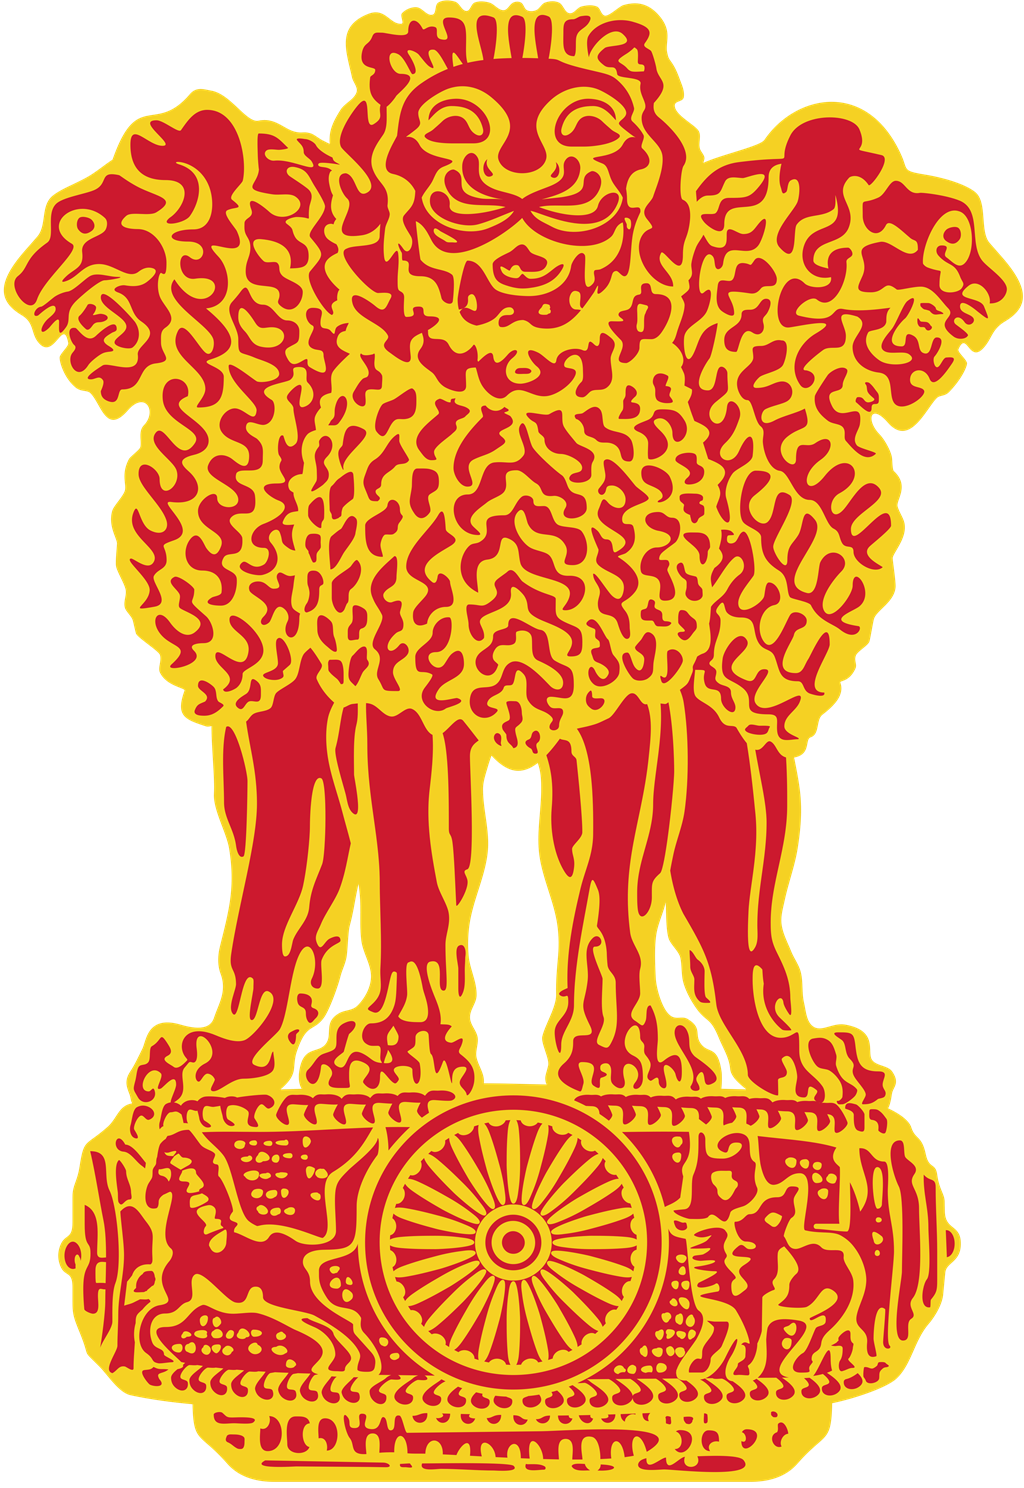 India logotype, transparent .png, medium, large